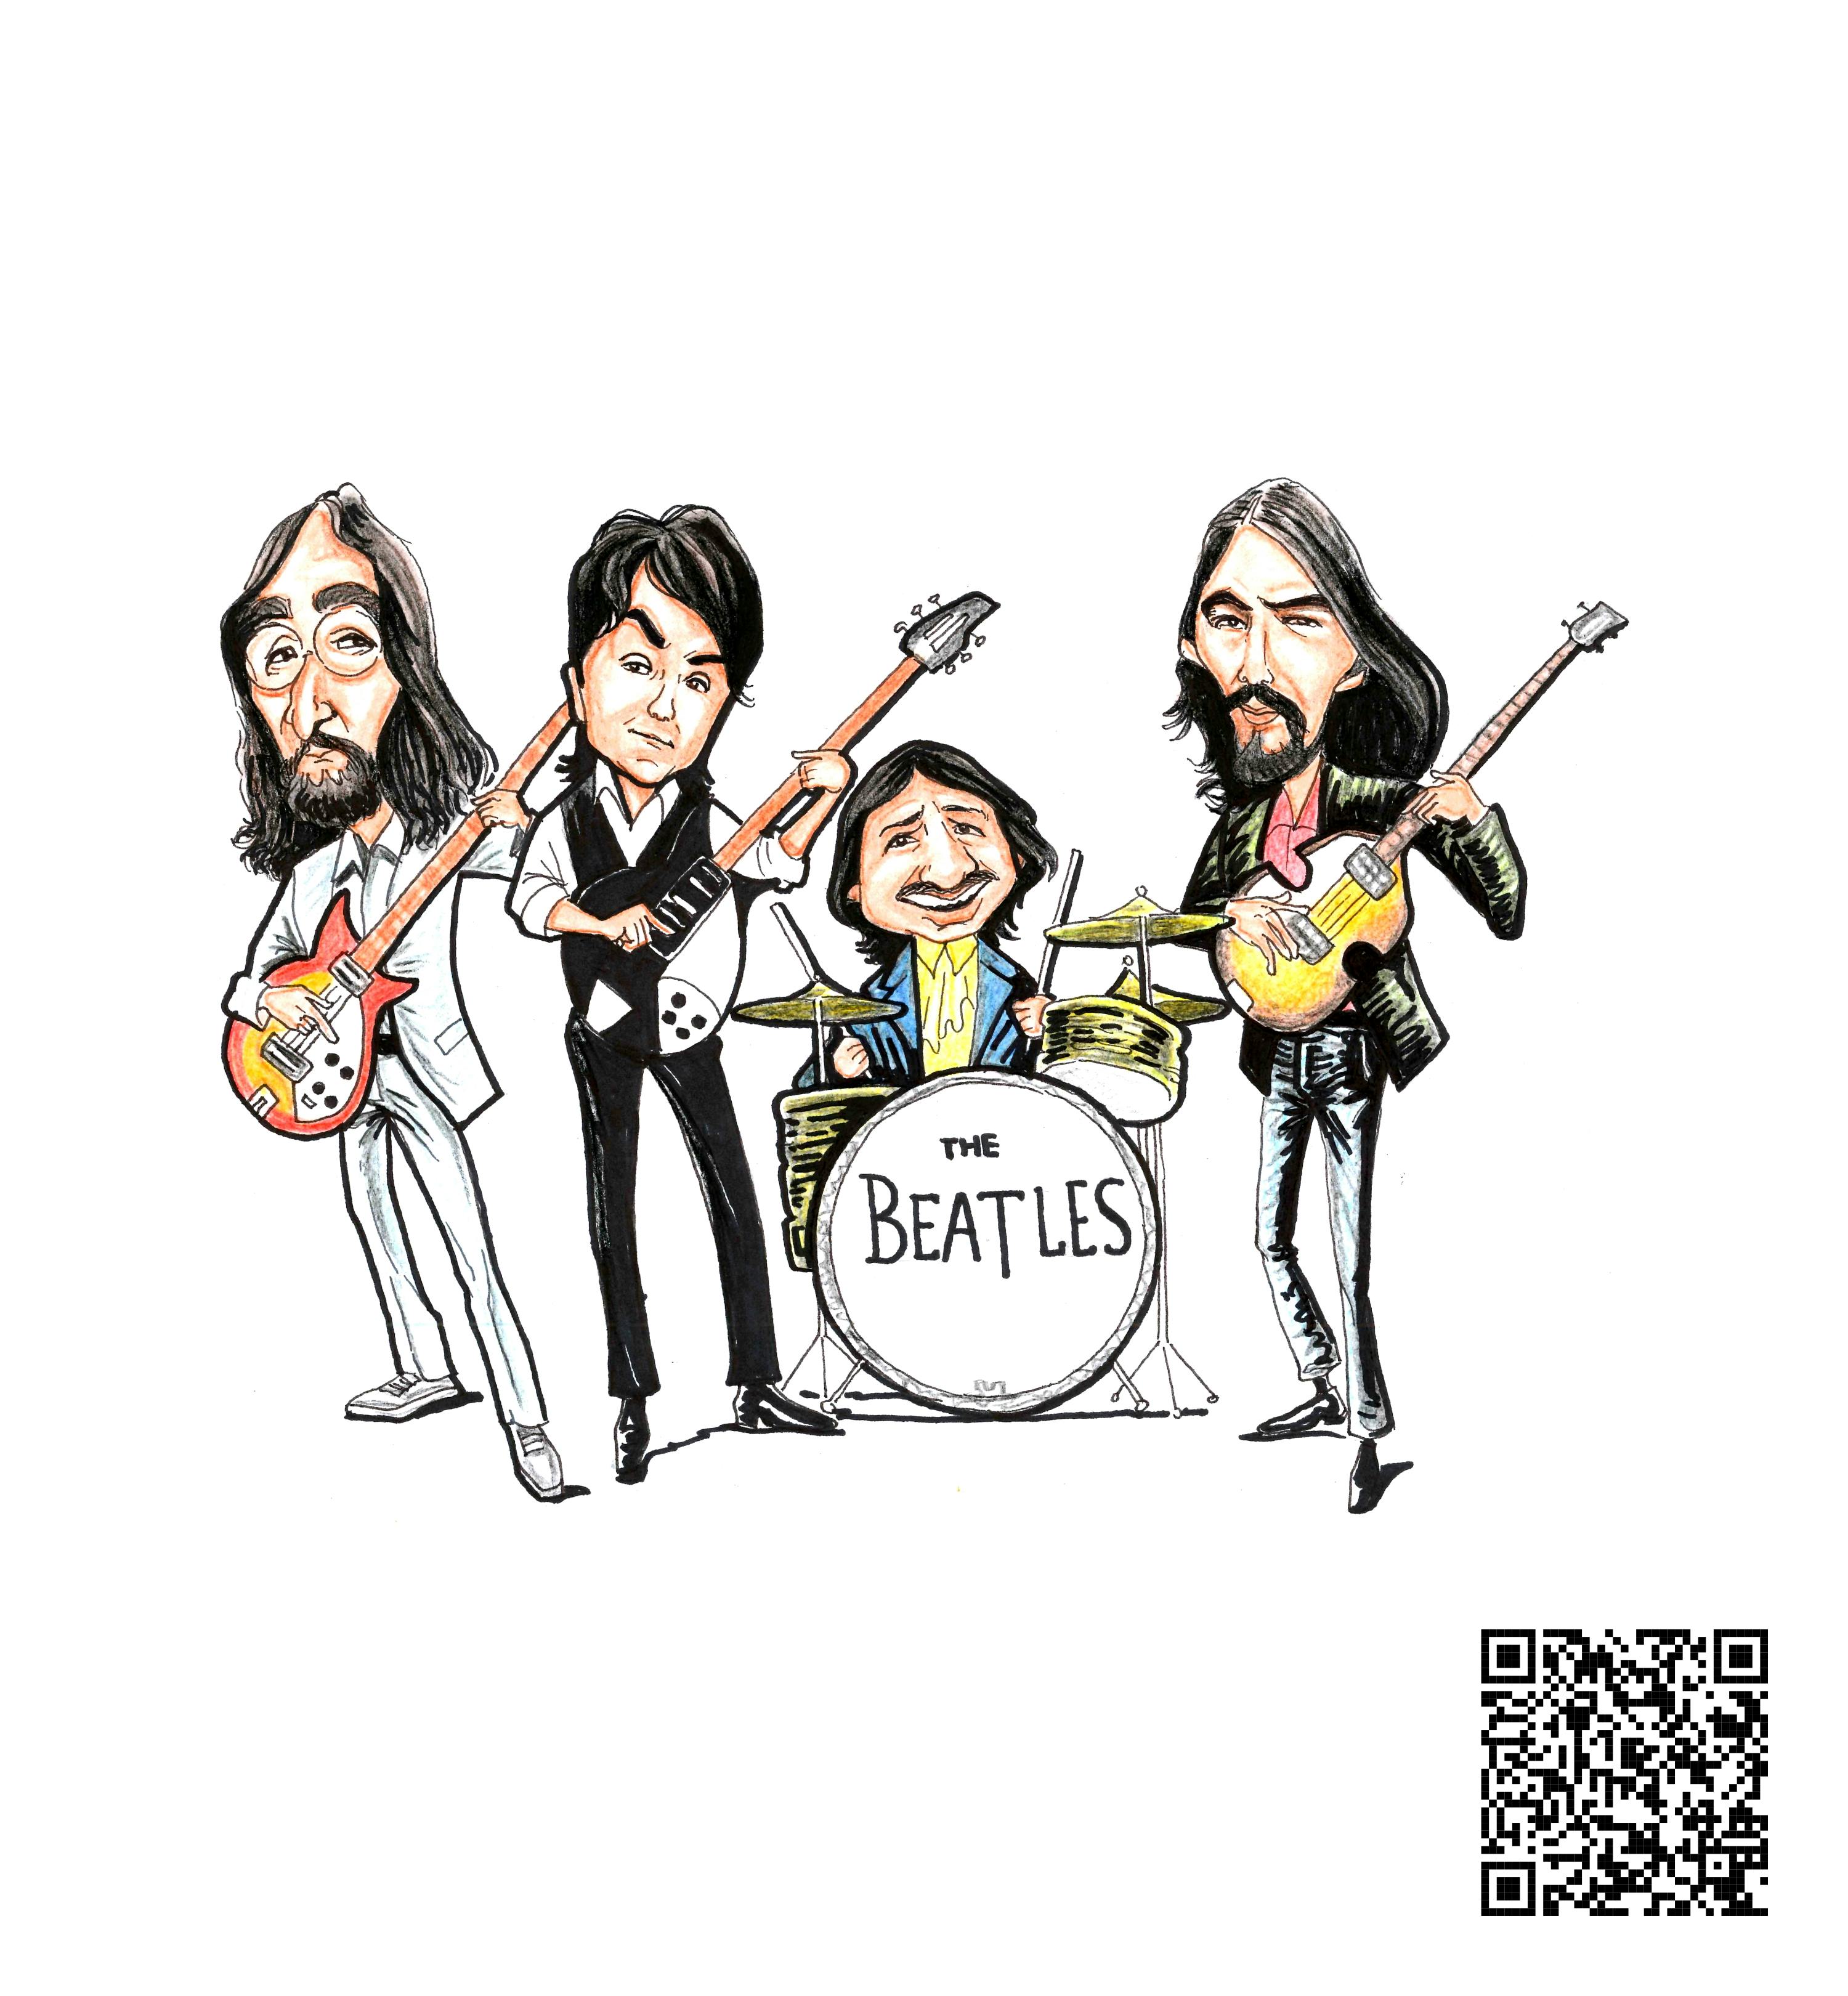 The Beatles (b. 1960)